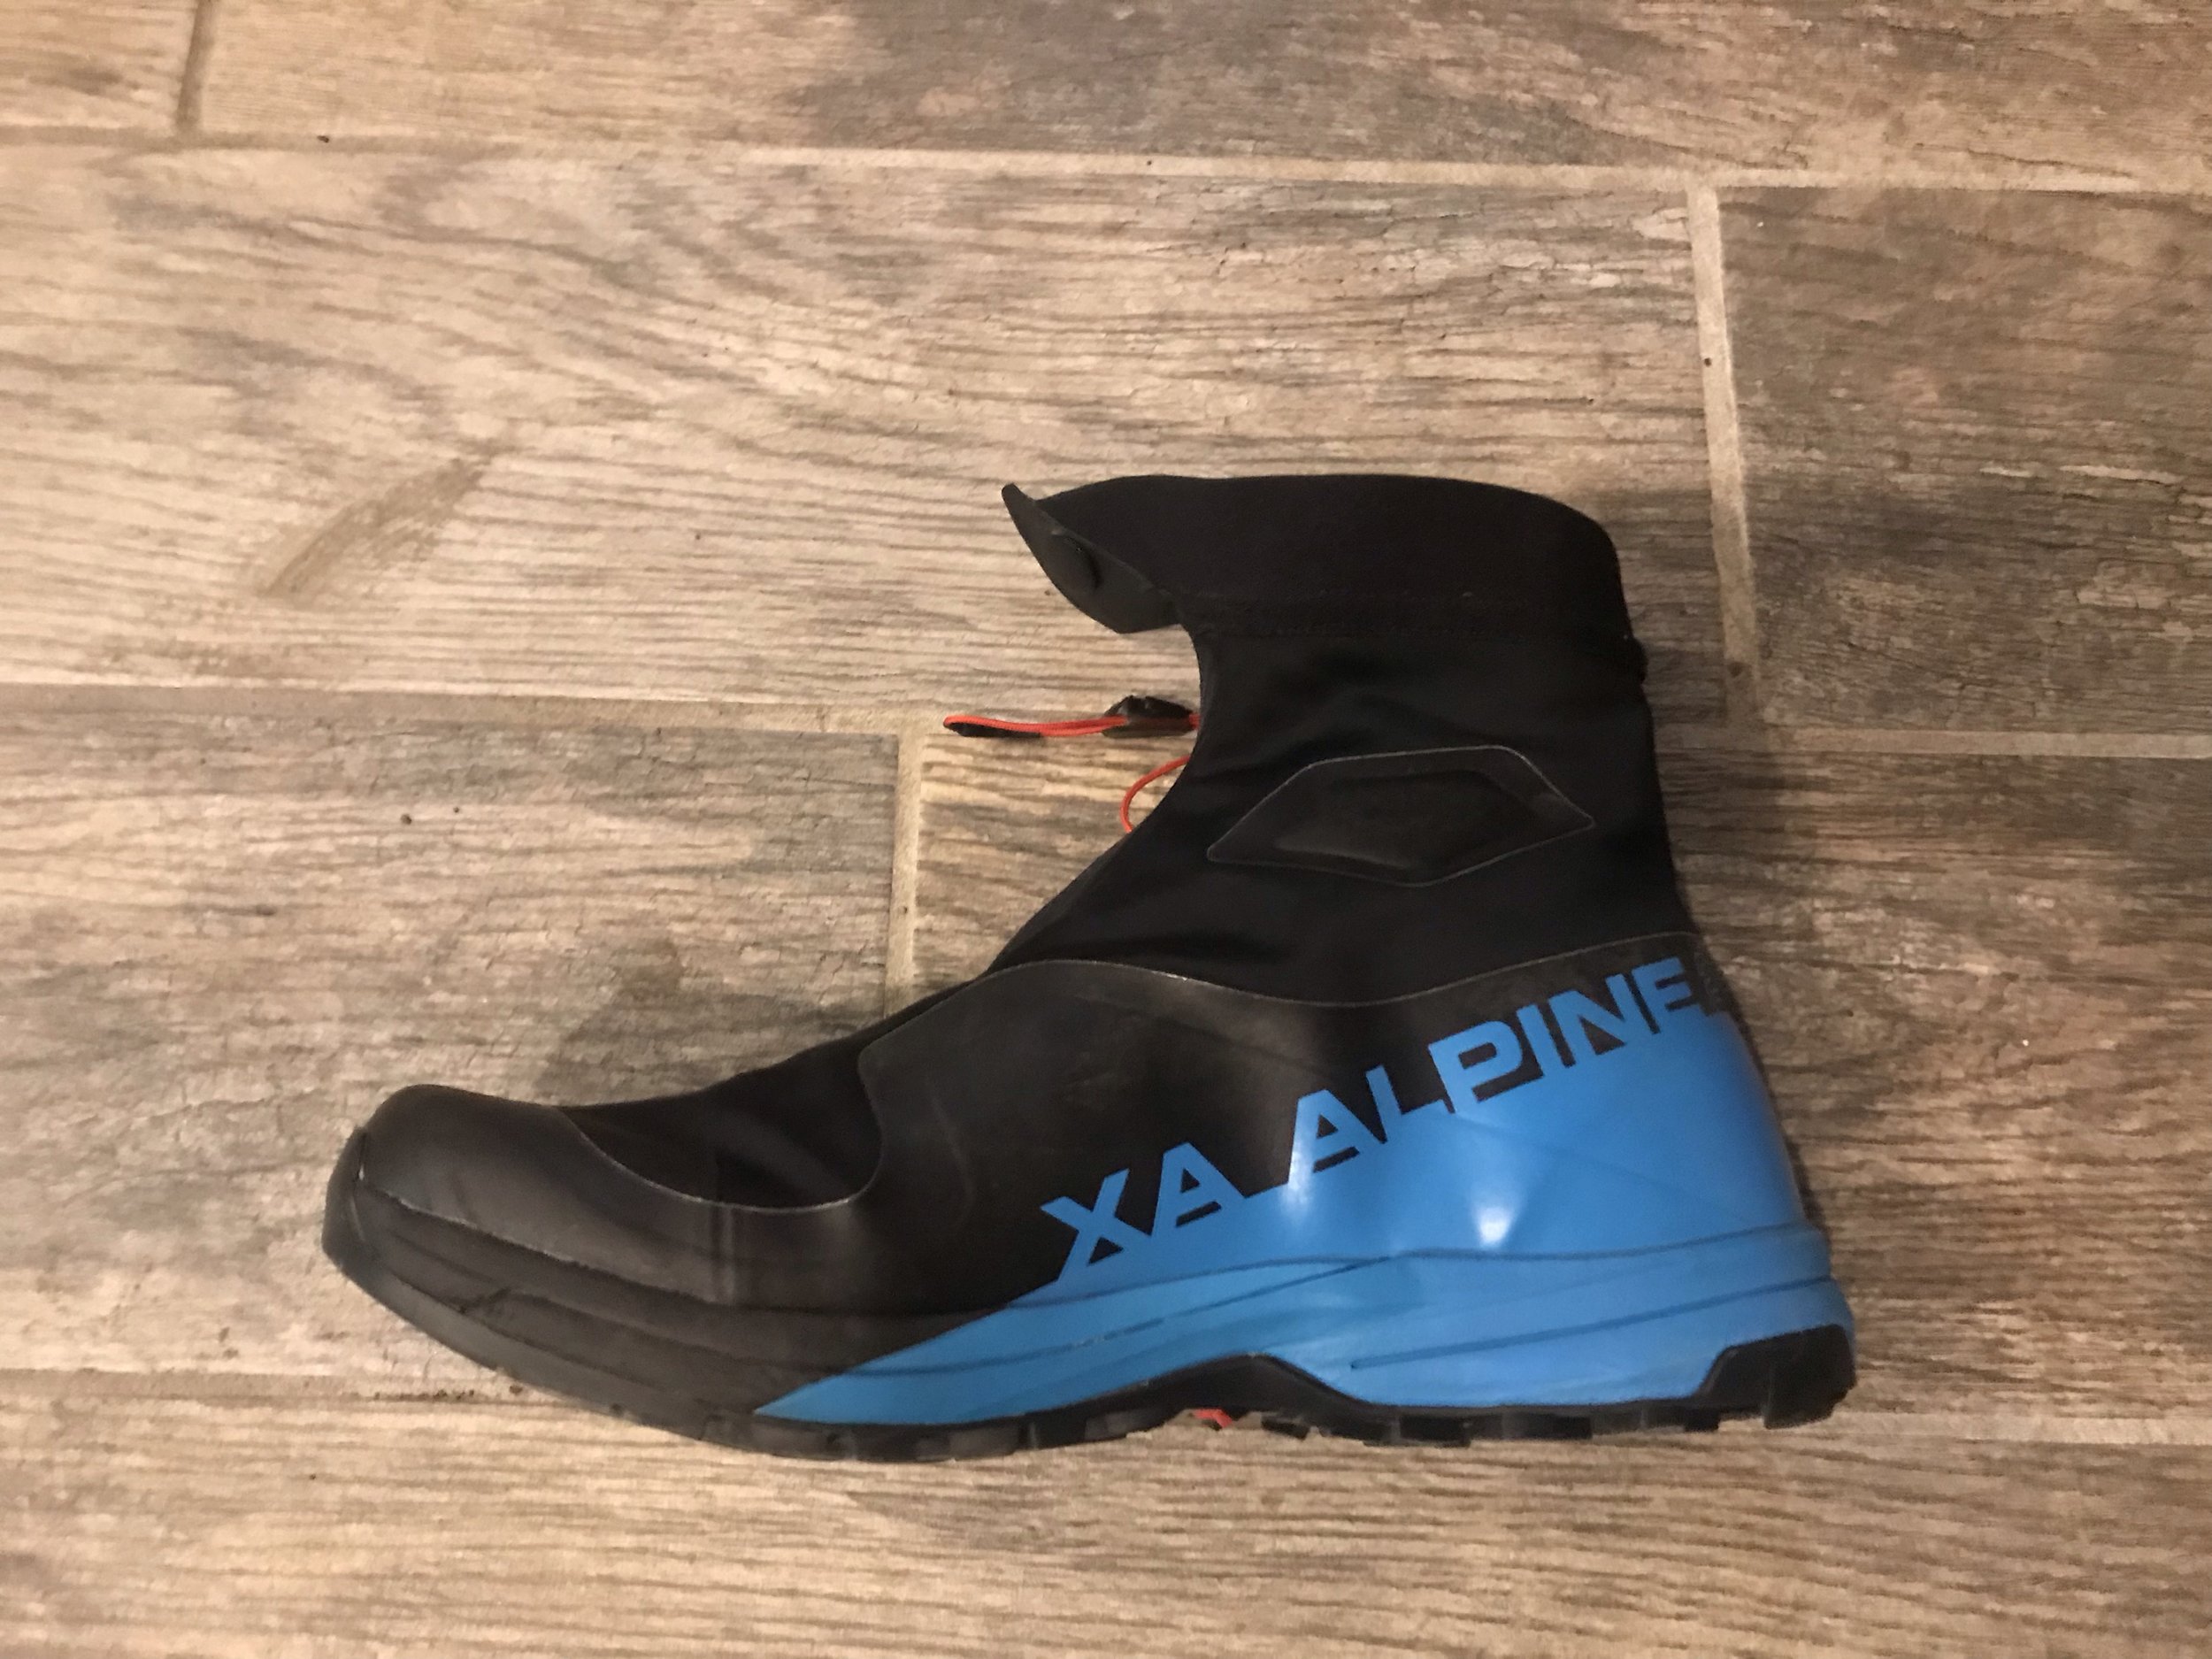 Salomon Alpine 2 Shoe — Mountain Peak Fitness